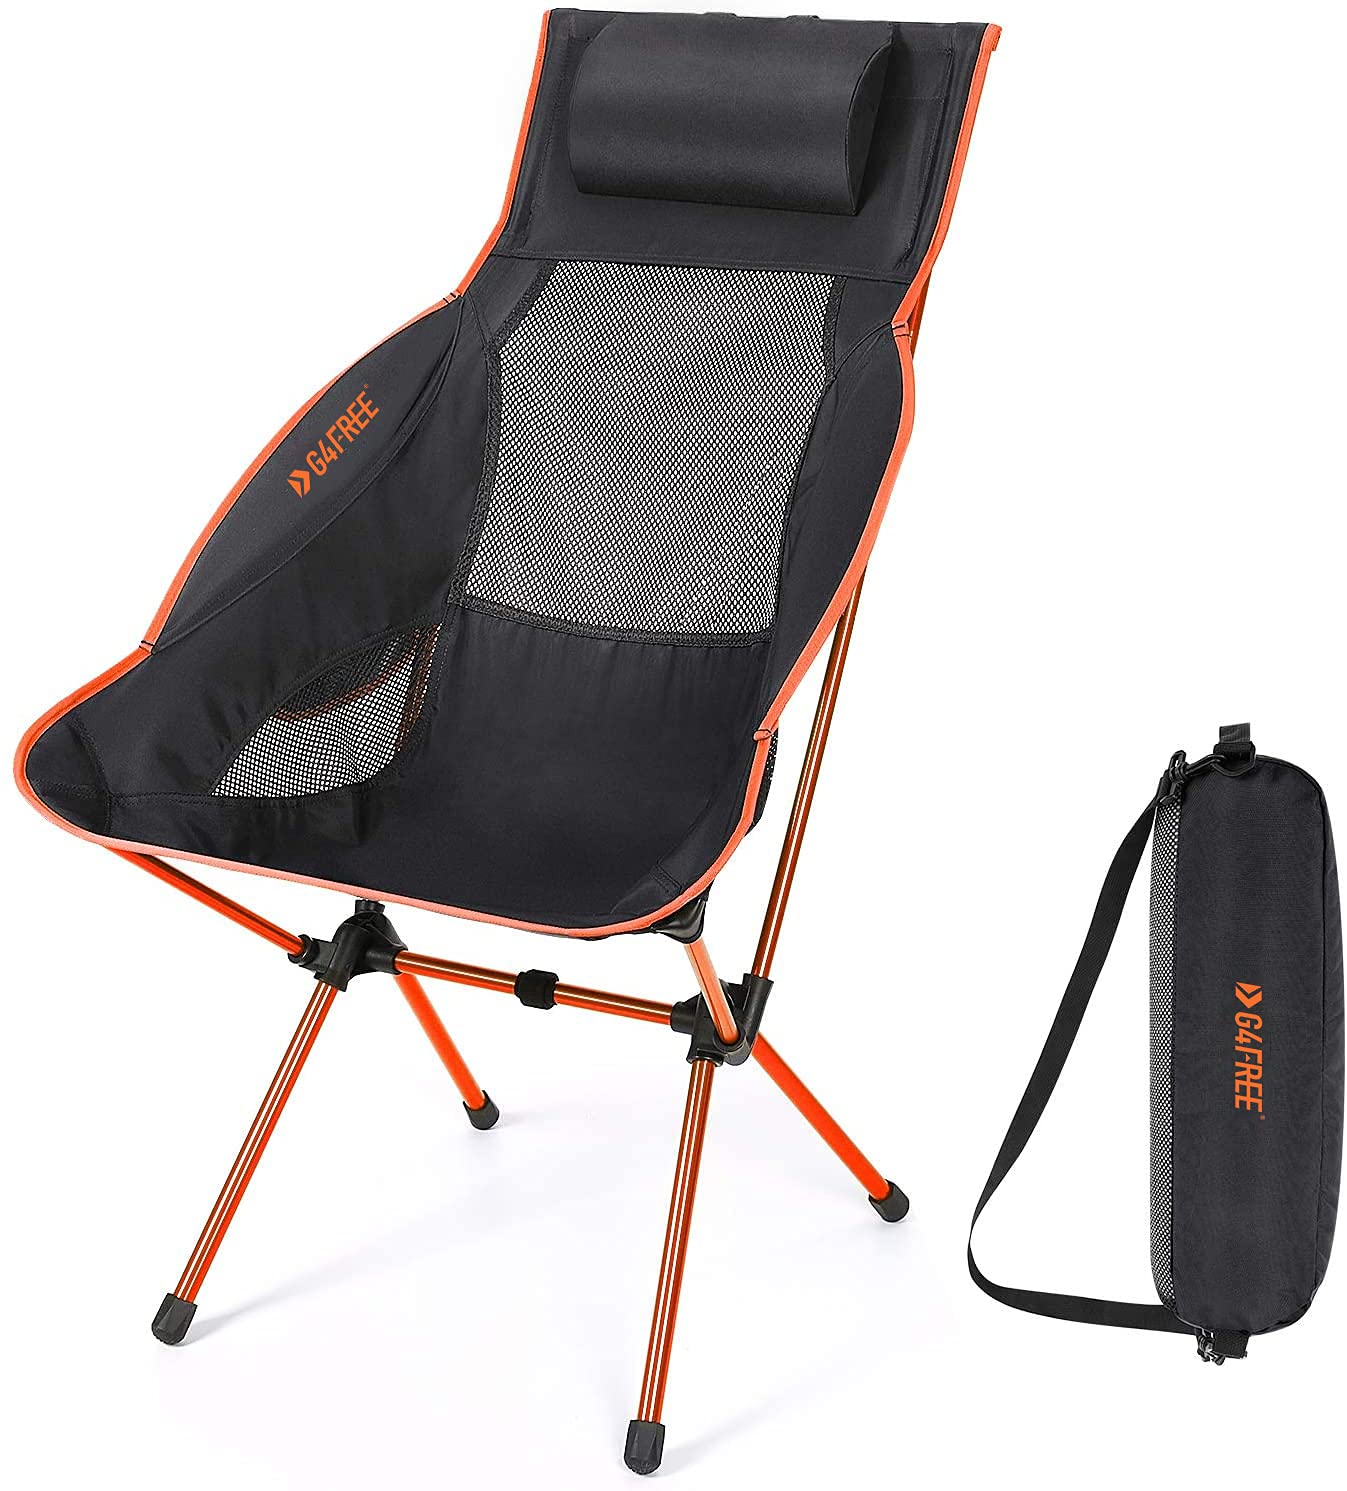 Best Lightweight Folding Chair For Camping